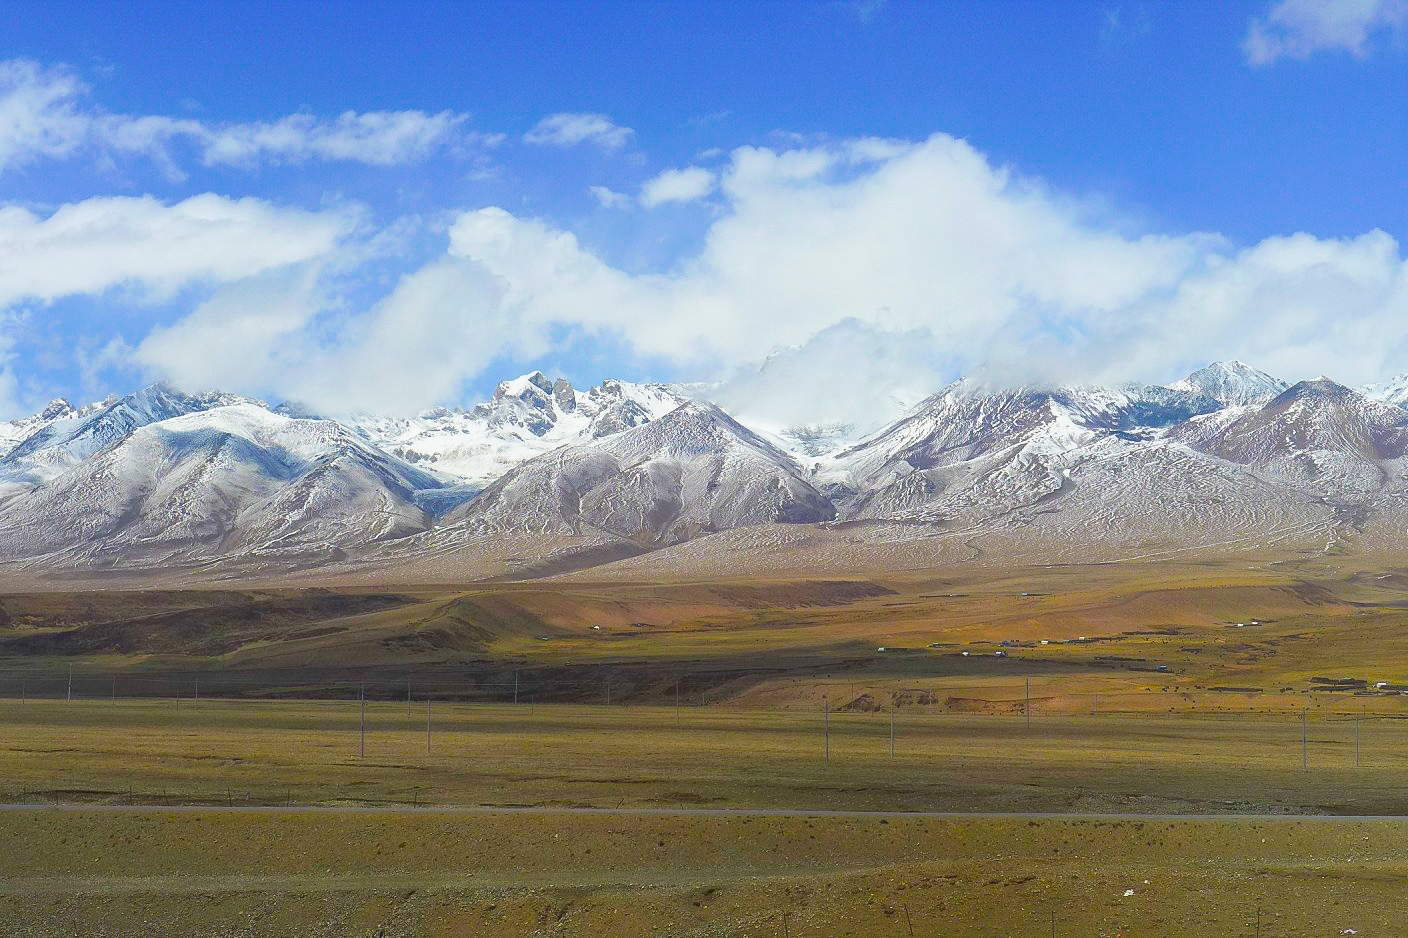 Train to Lhasa 2014